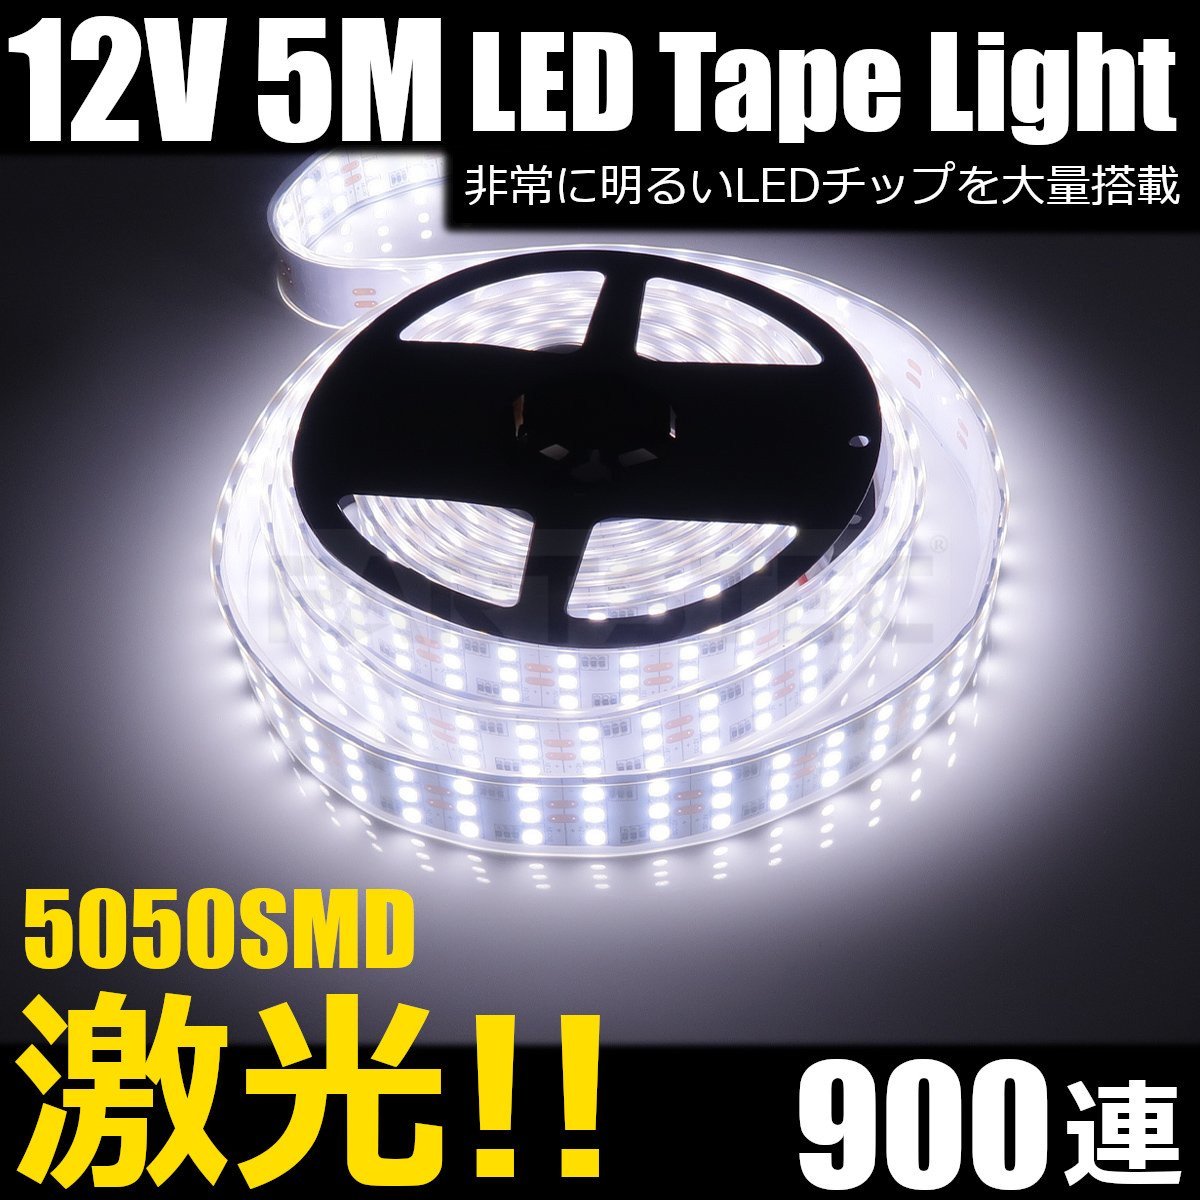 LED テープライト 5m ホワイト 白 SMD5050 3列発光 900連 防水 劣化防止 カバー カット 切断可能 蛍光灯 トラック 船舶 / 146-38